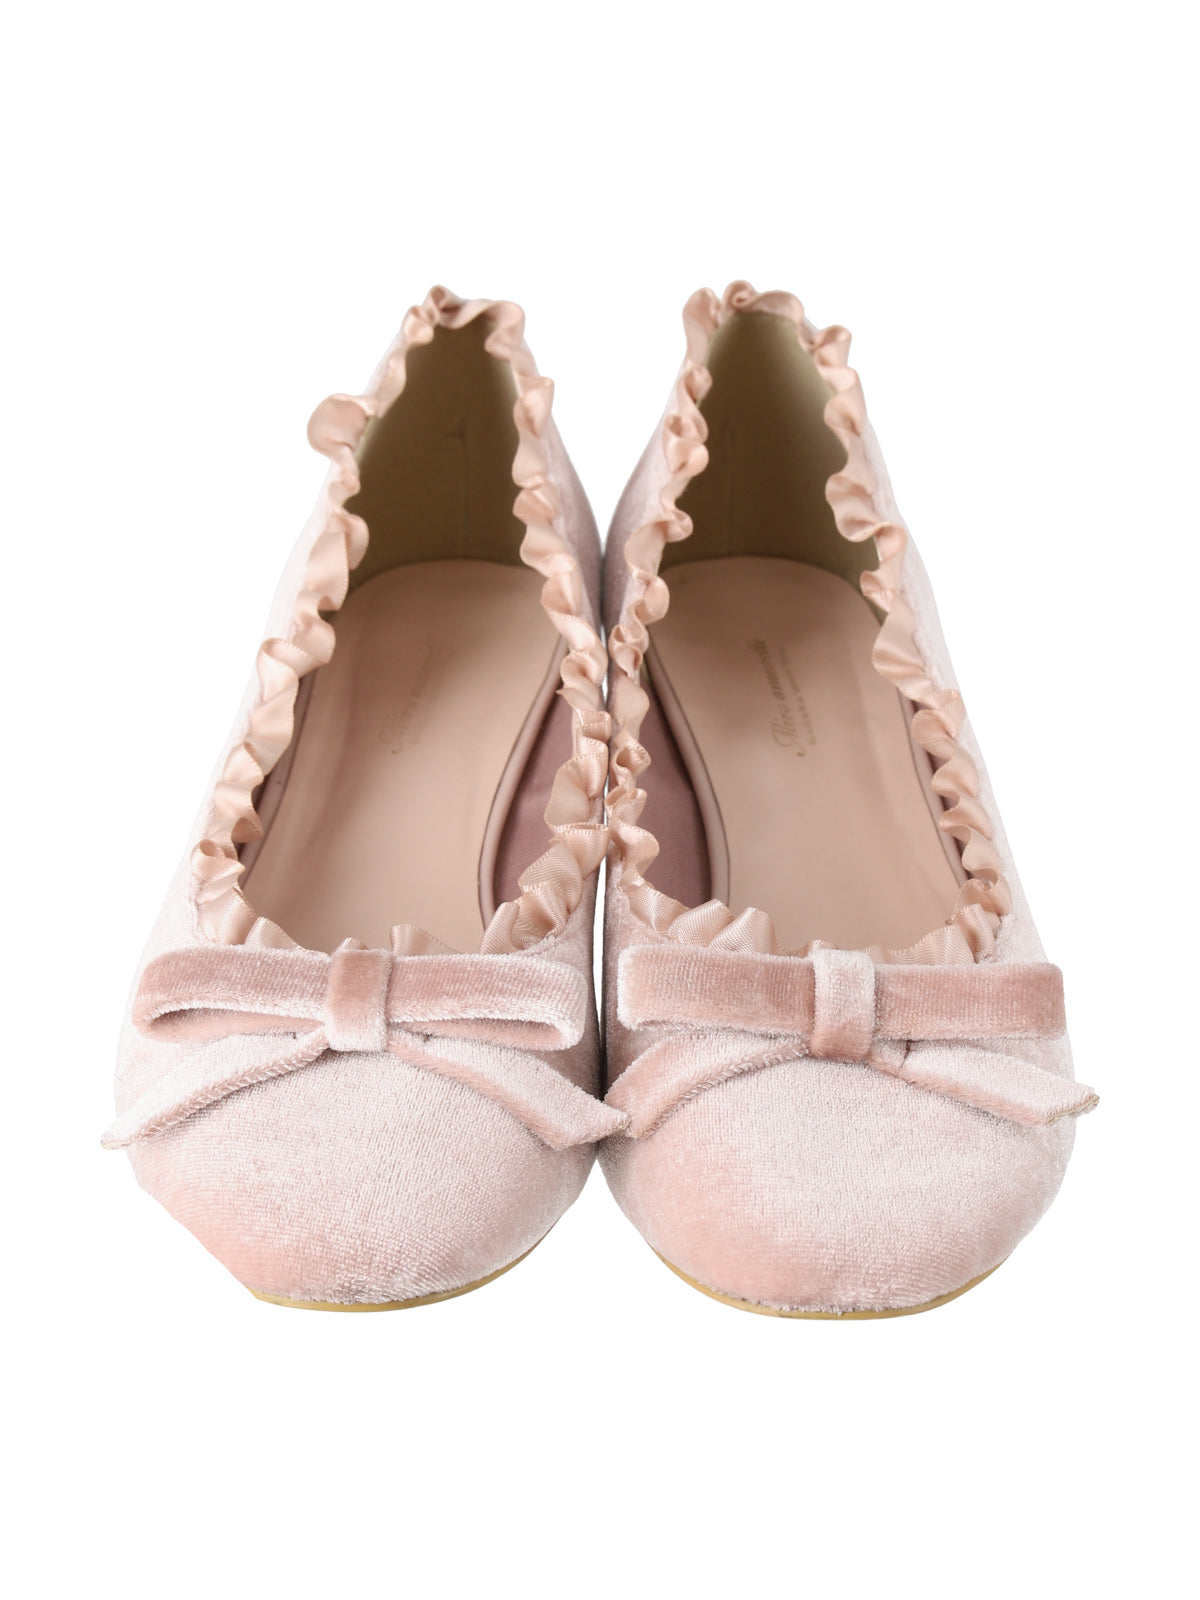 velour frill bloom ballet shoes